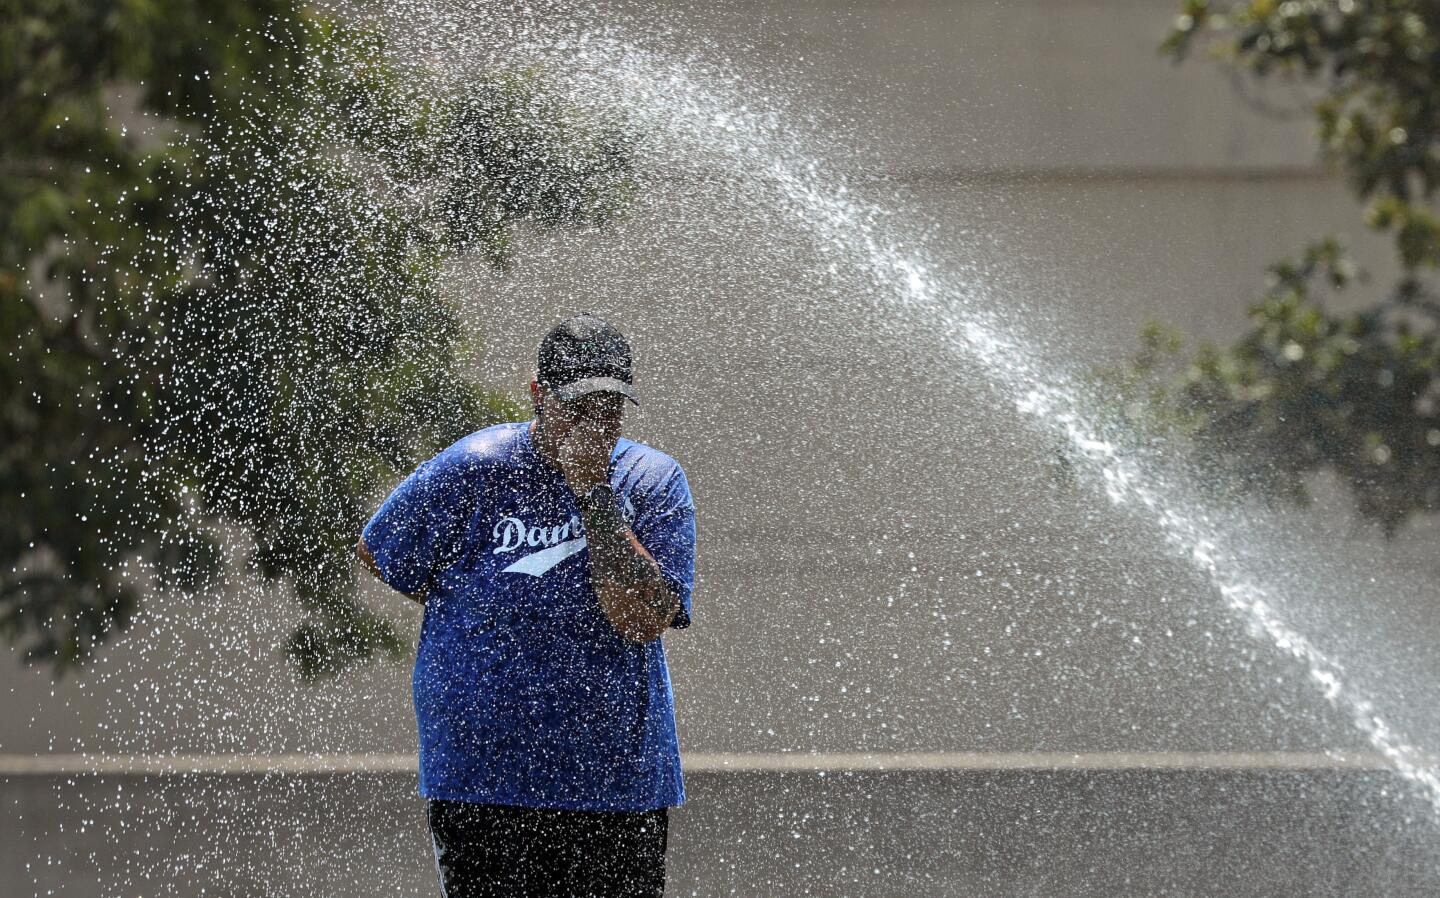 Reana Gallardo cools off in the sprinkler at Mason Park in Chatsworth